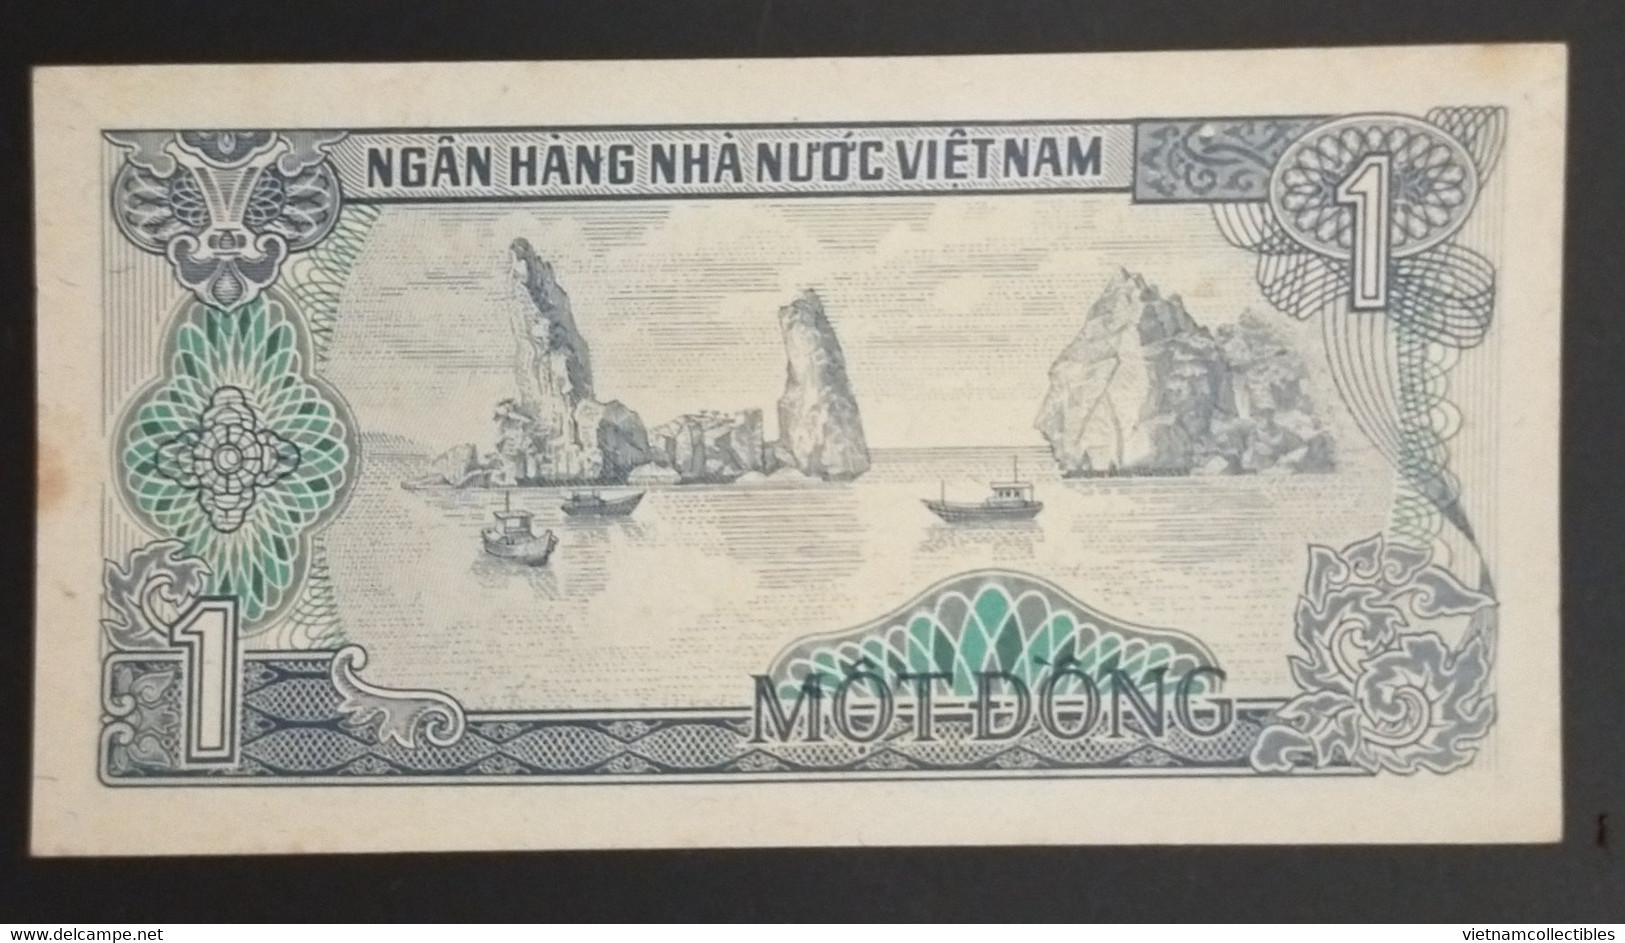 Viet Nam Vietnam 1 Dong AU Banknote Note 1985 - Pick # 90 / 02 Photo - Vietnam